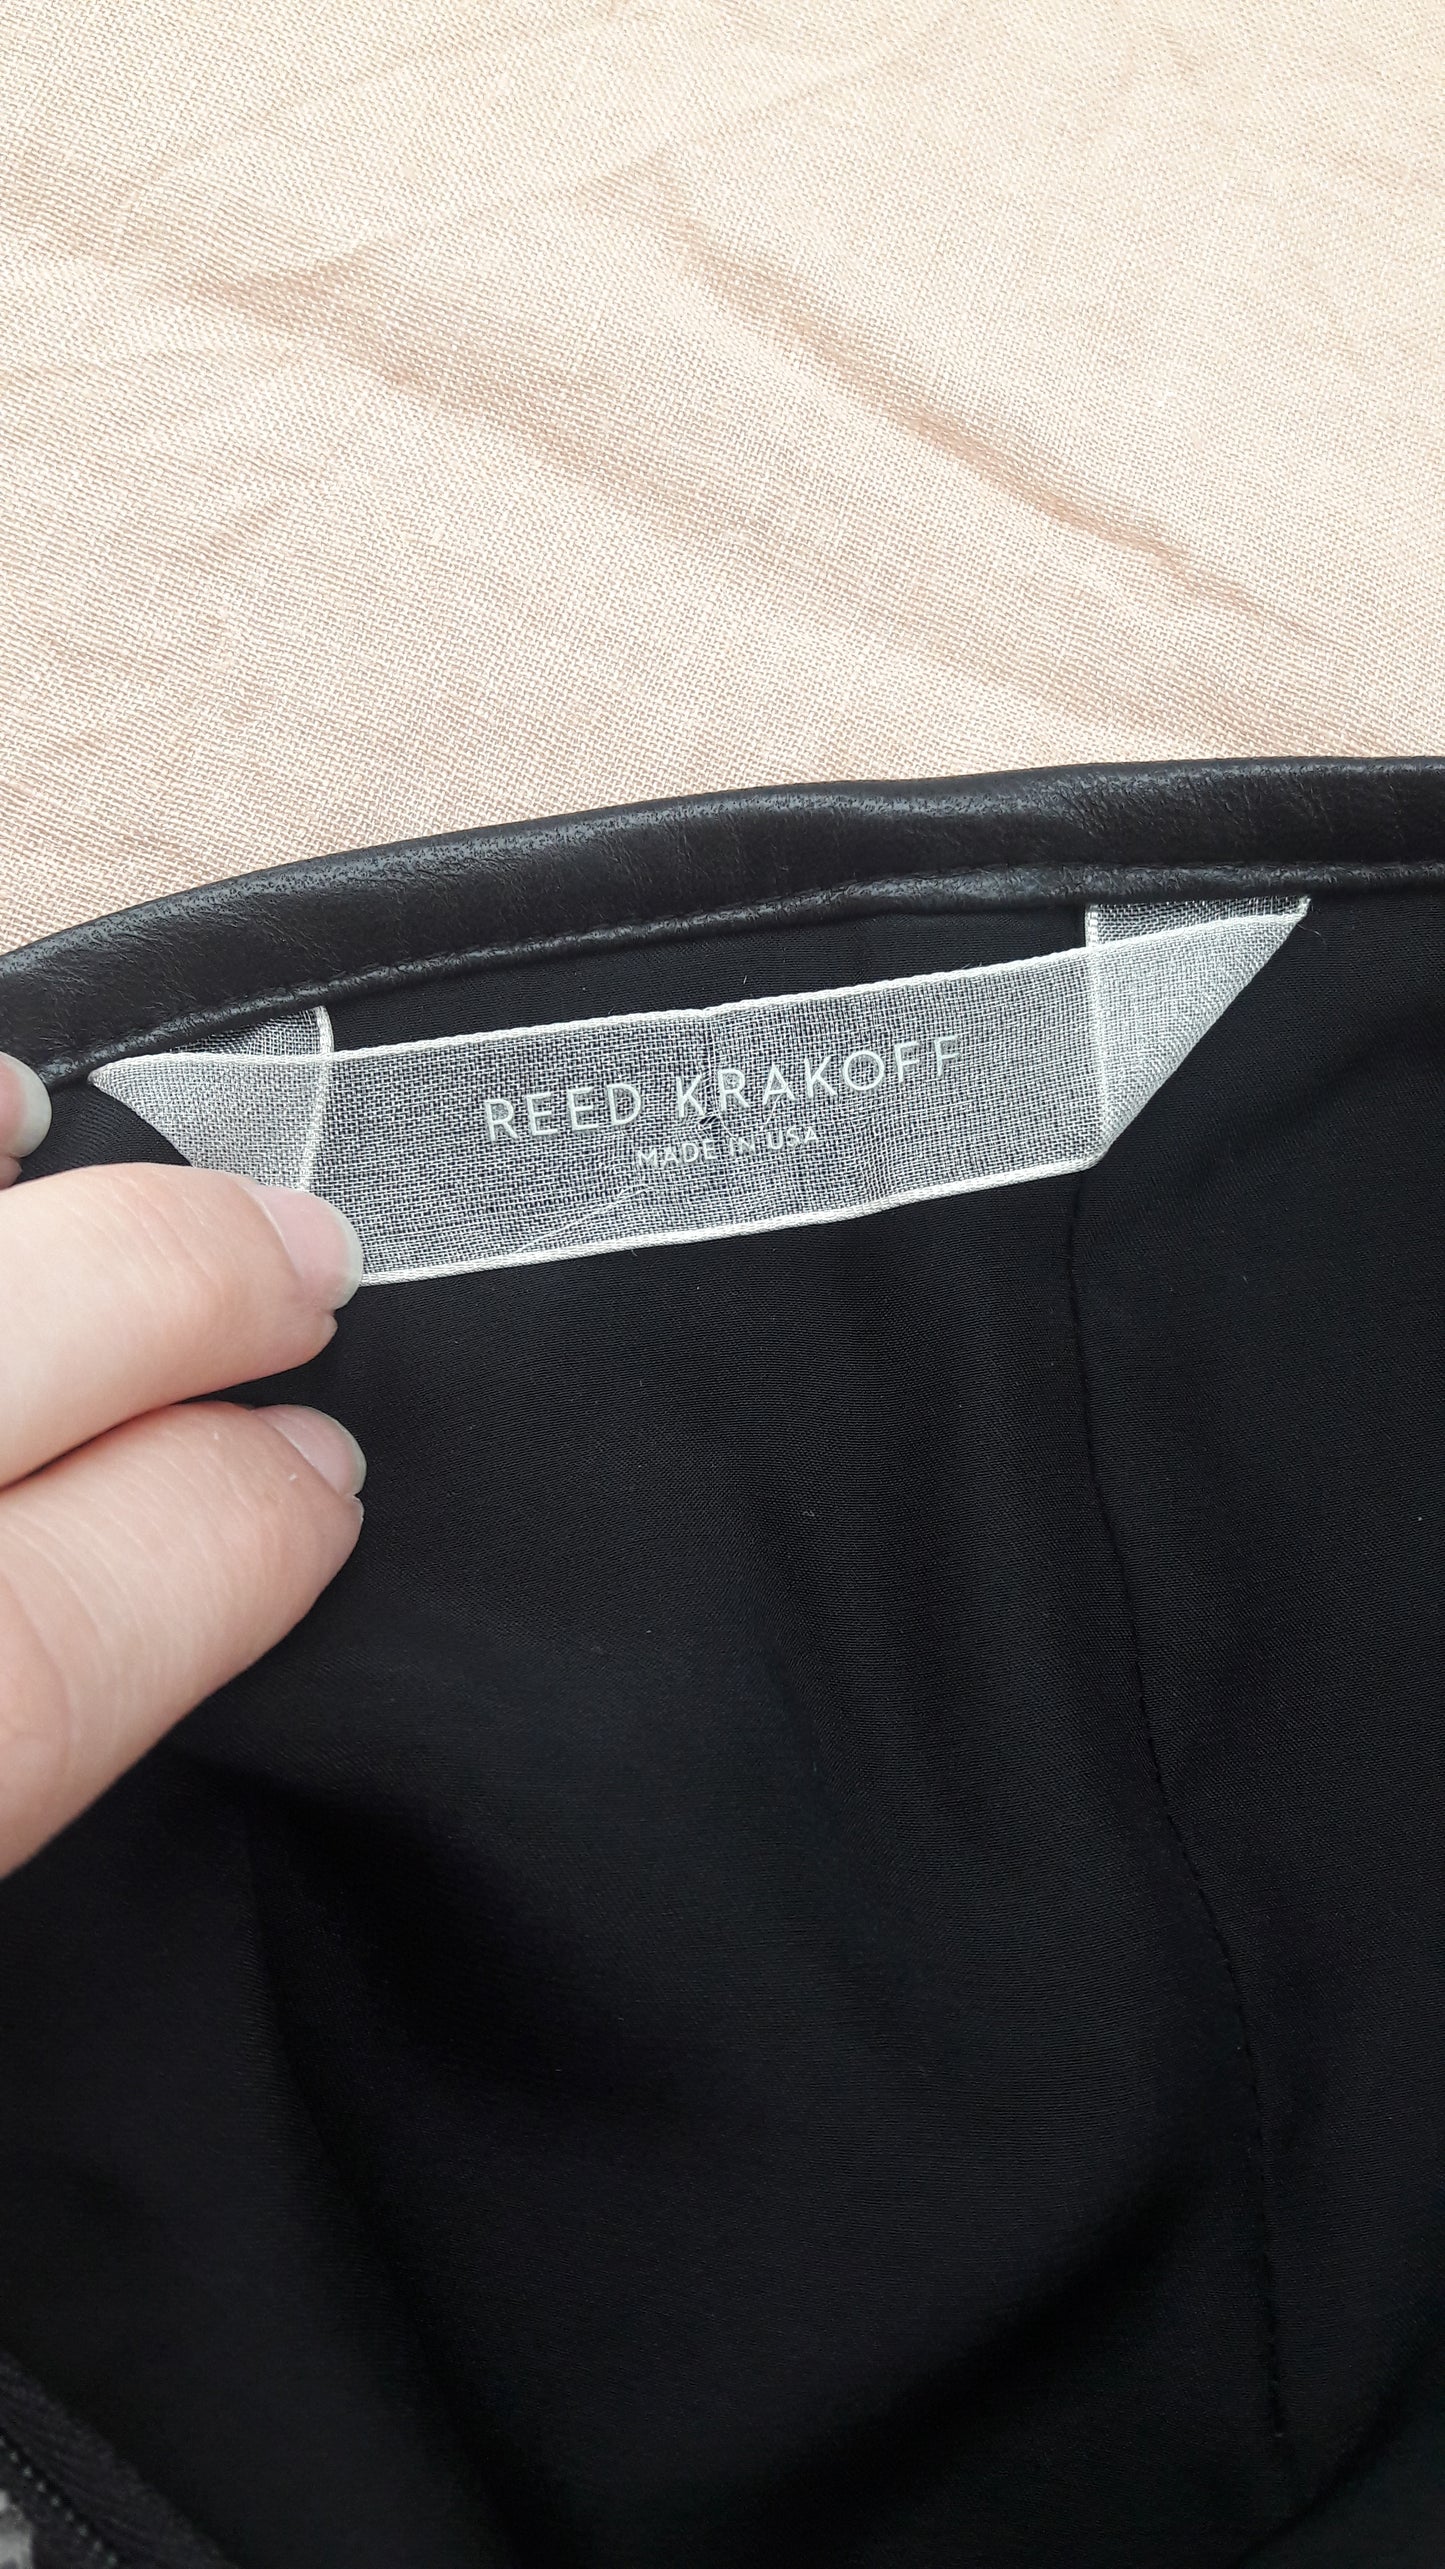 Mixed Fabric Reed Krakoff Pencil Skirt